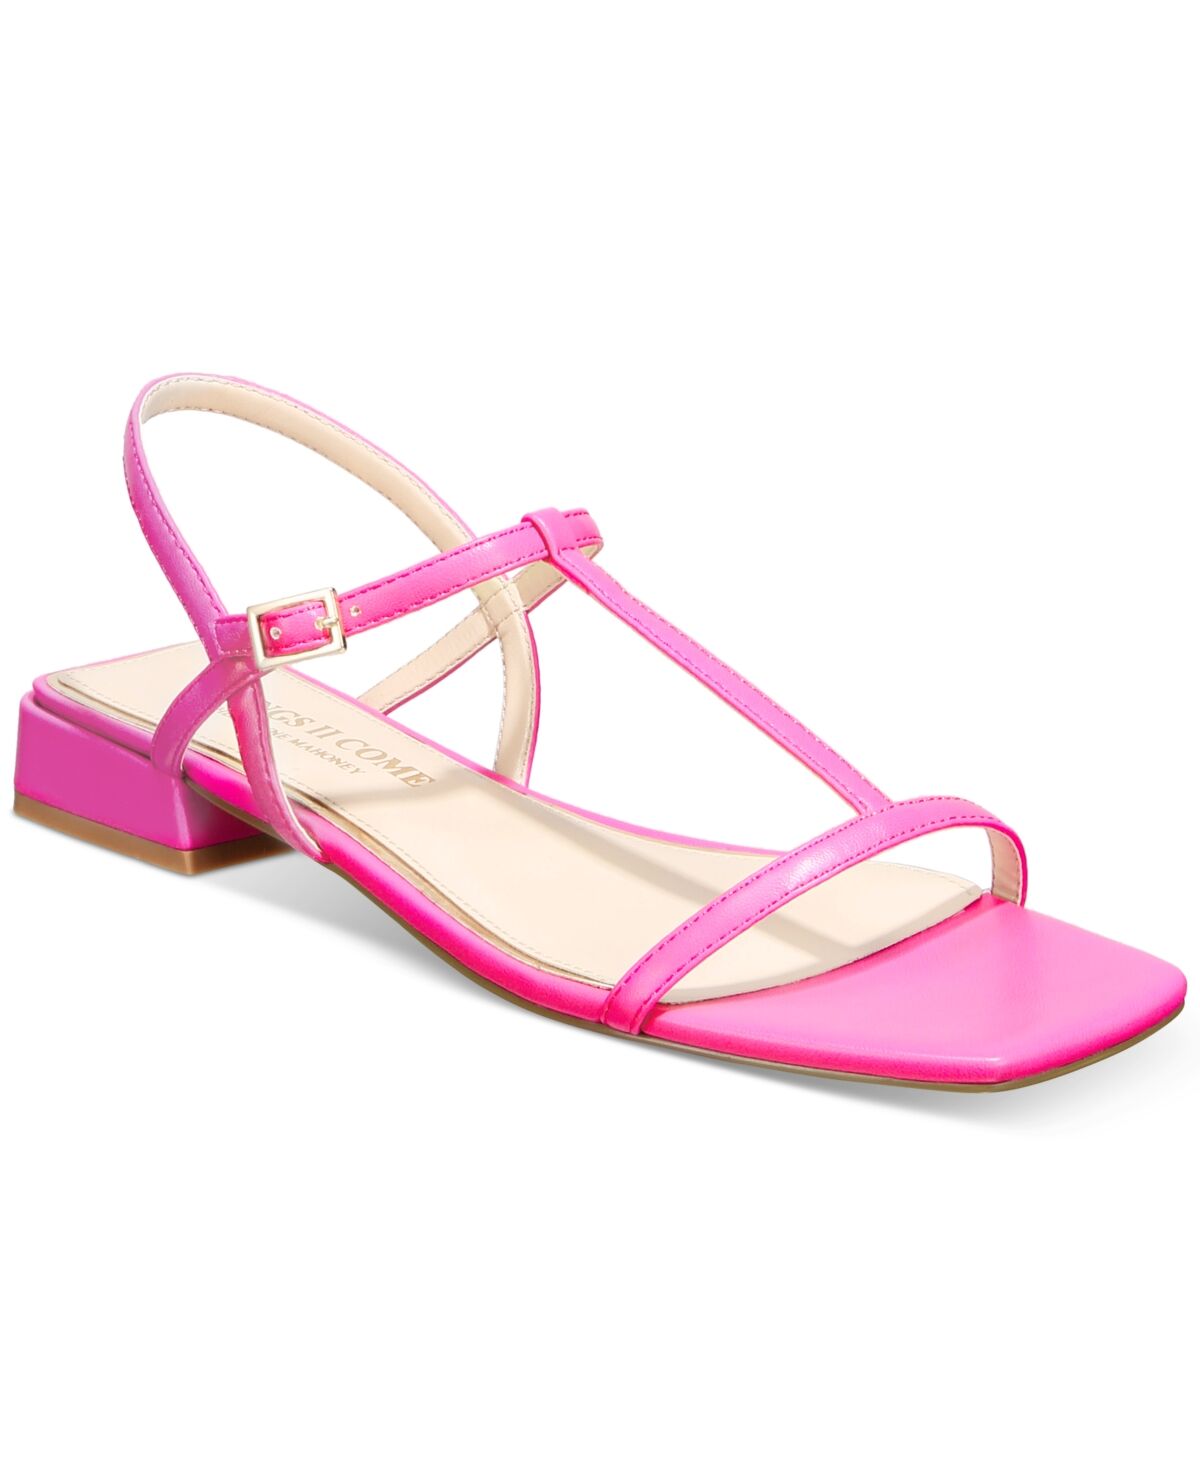 Things Ii Come Women's Alexandra Luxurious Gladiator Sandals - Shocking Pink